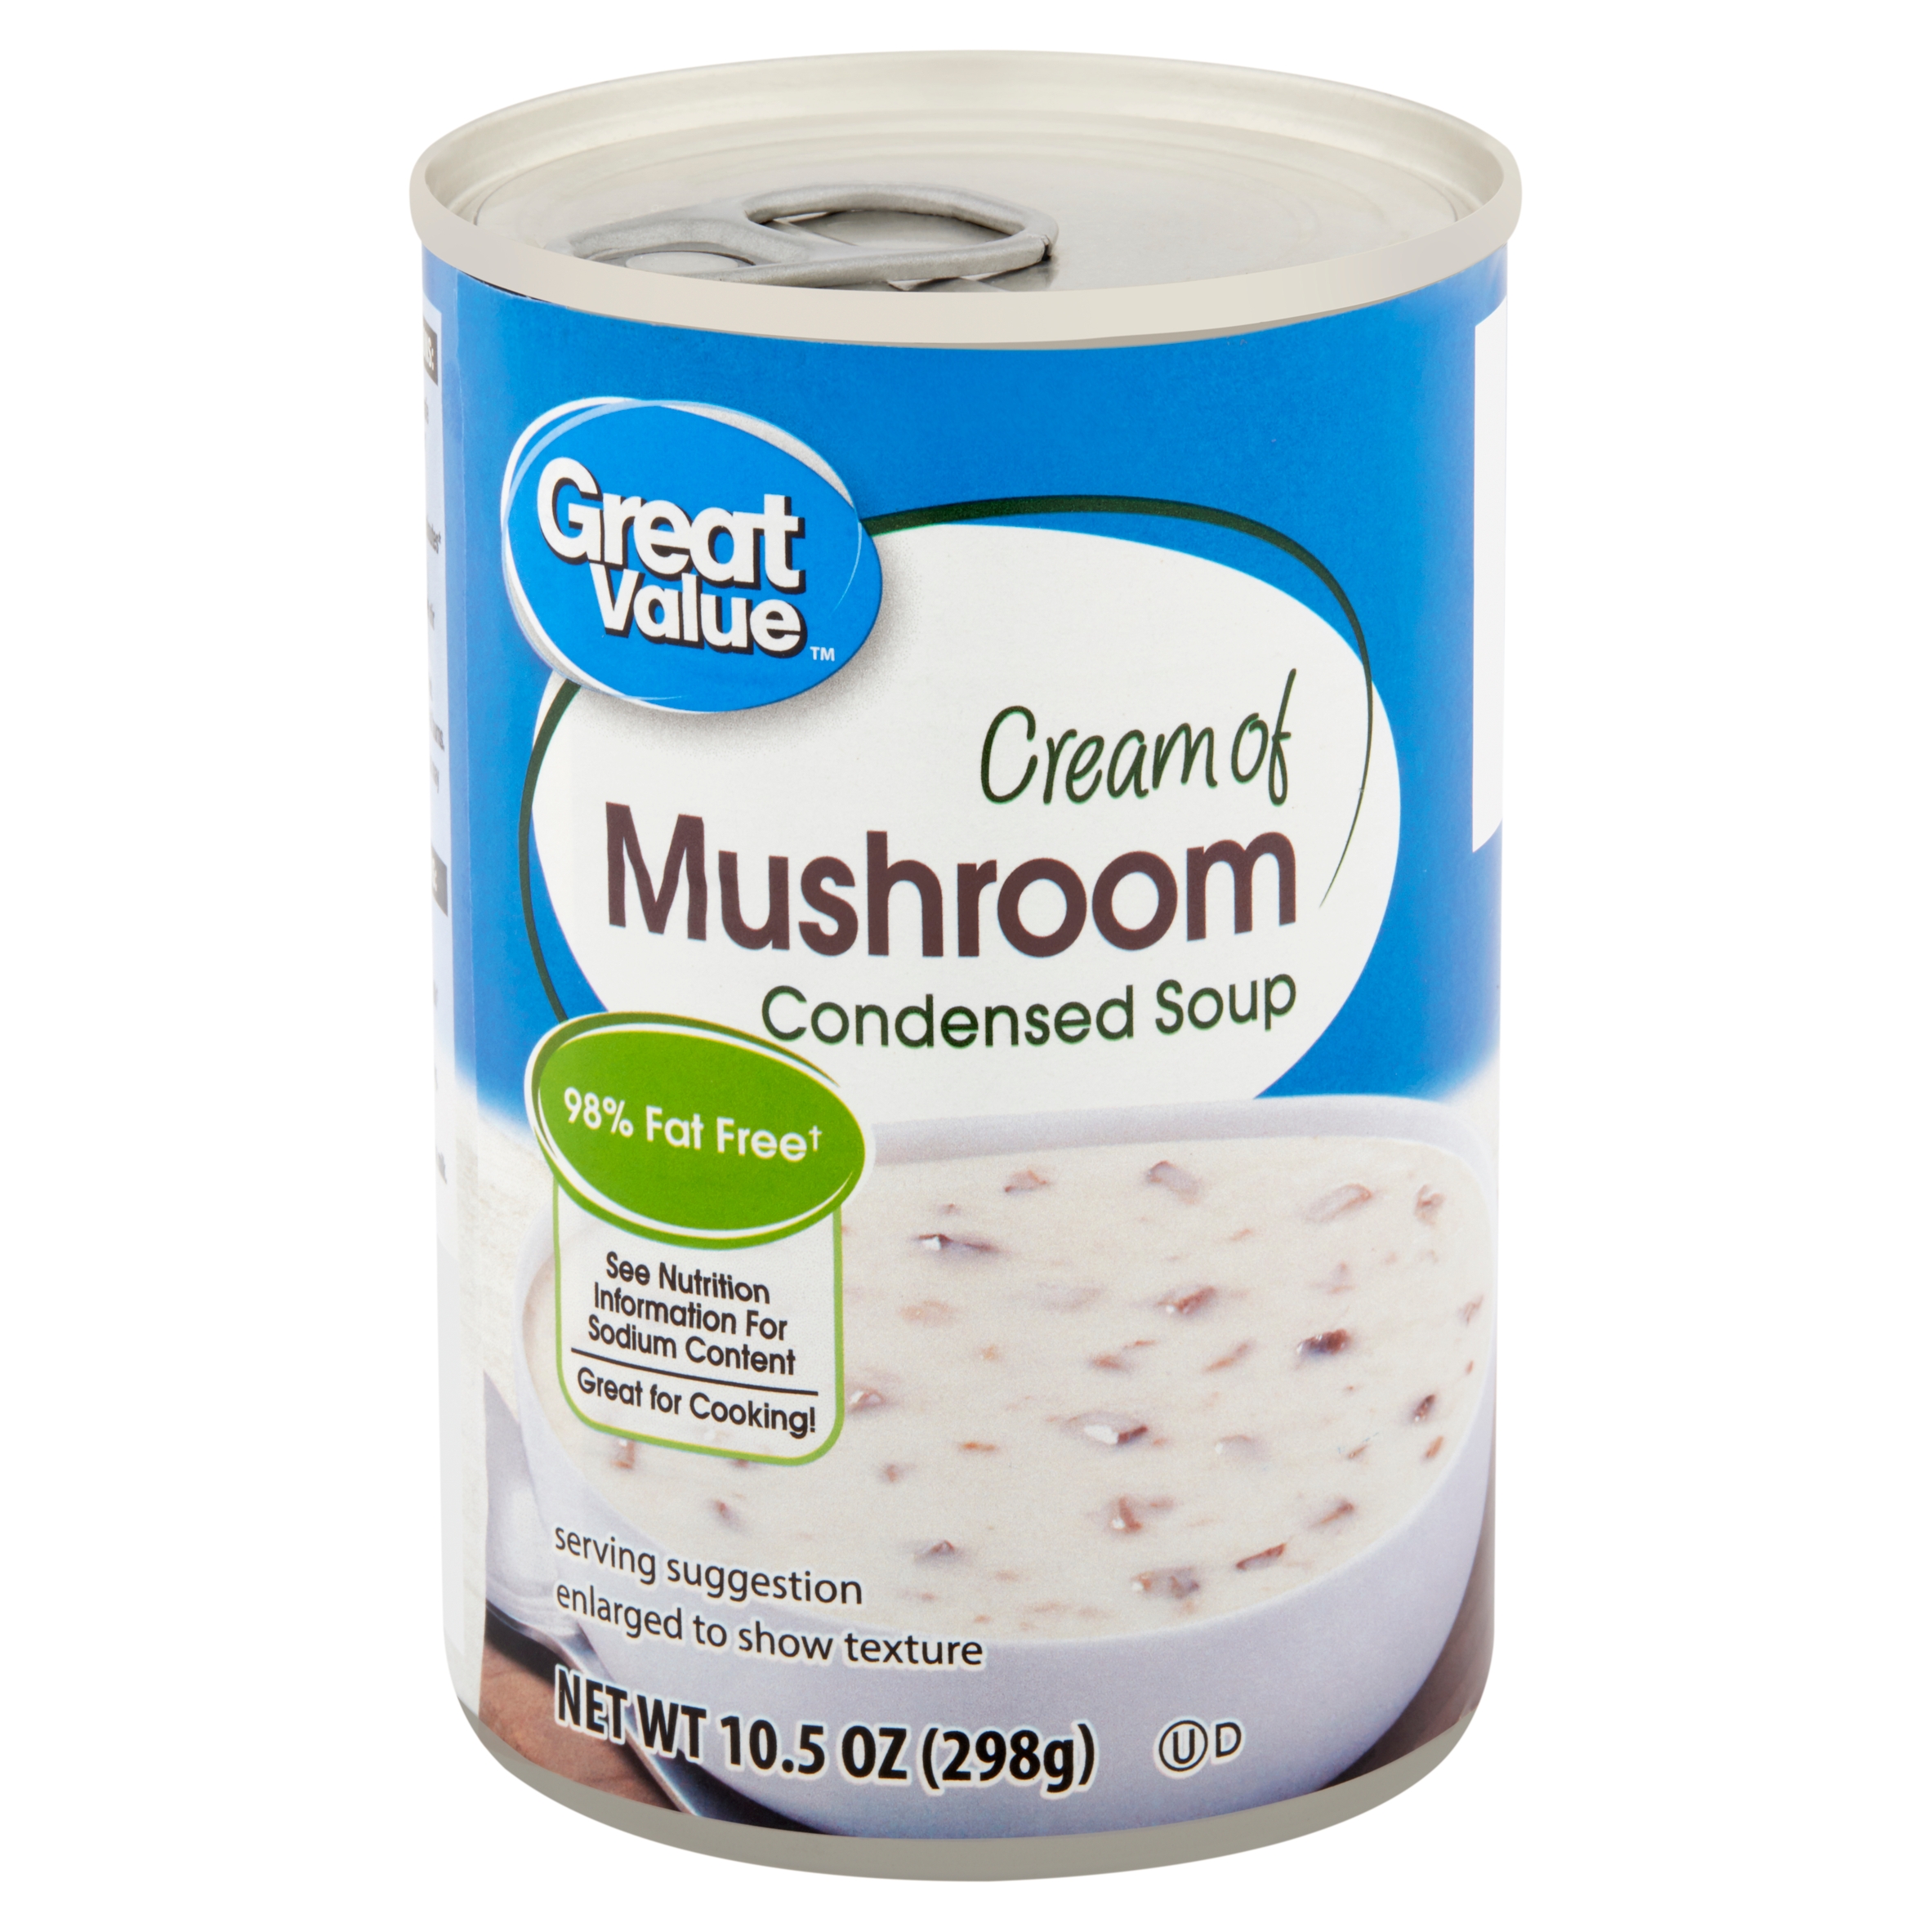 Great Value Cream of Mushroom Condensed Soup, 10.5 Oz Image